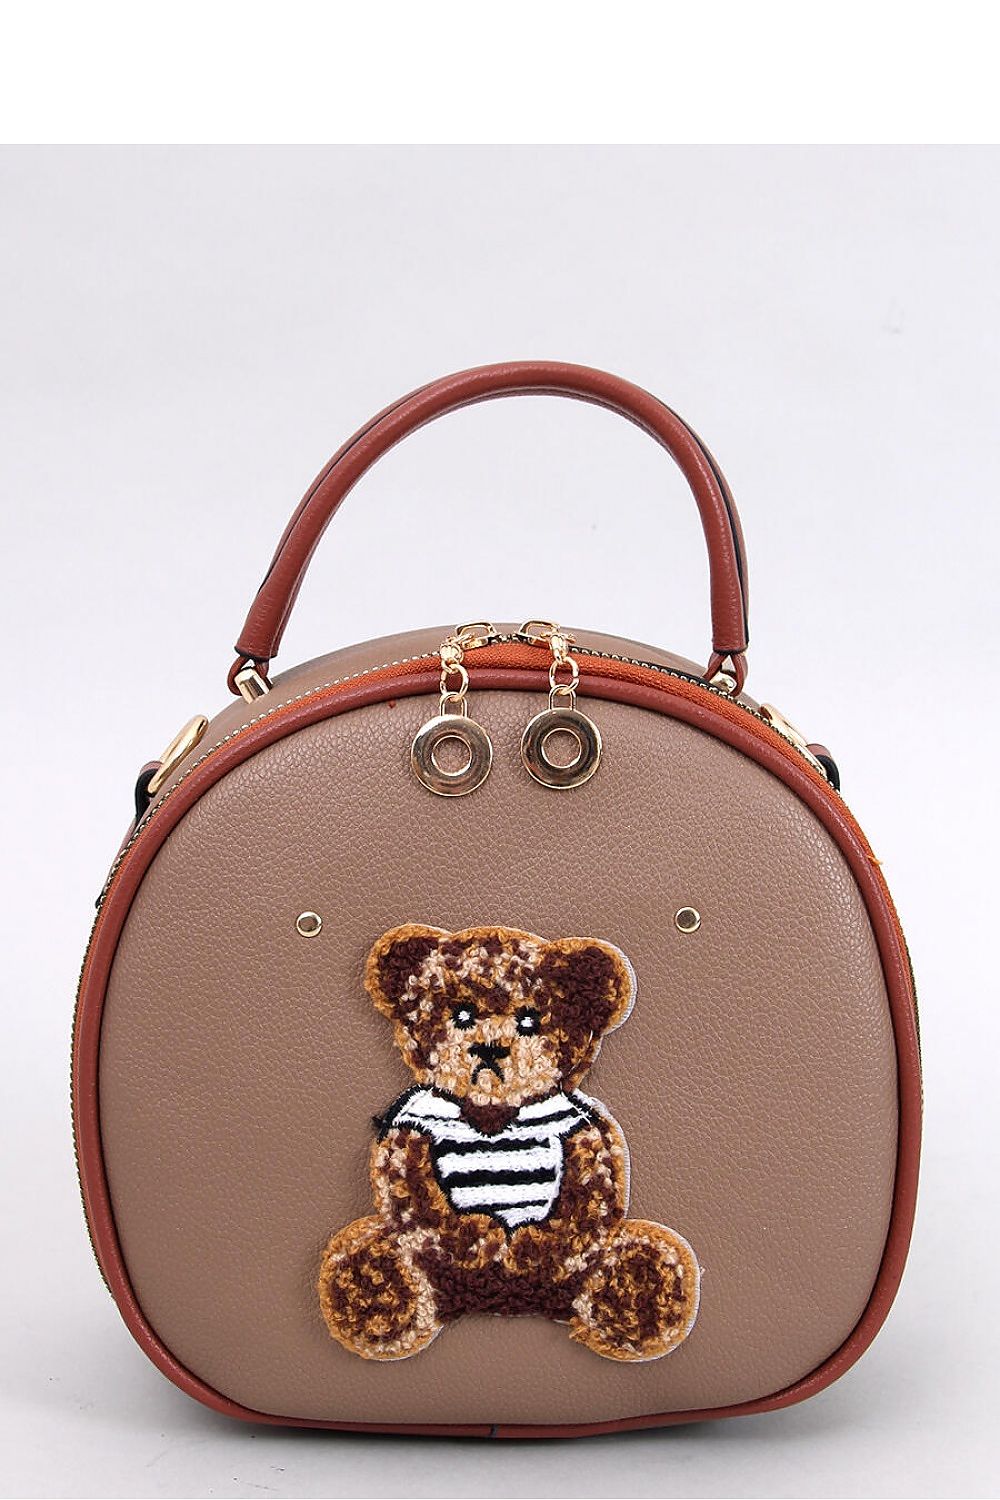 Teddy Round Messenger Bag with Adjustable Strap - Cafe